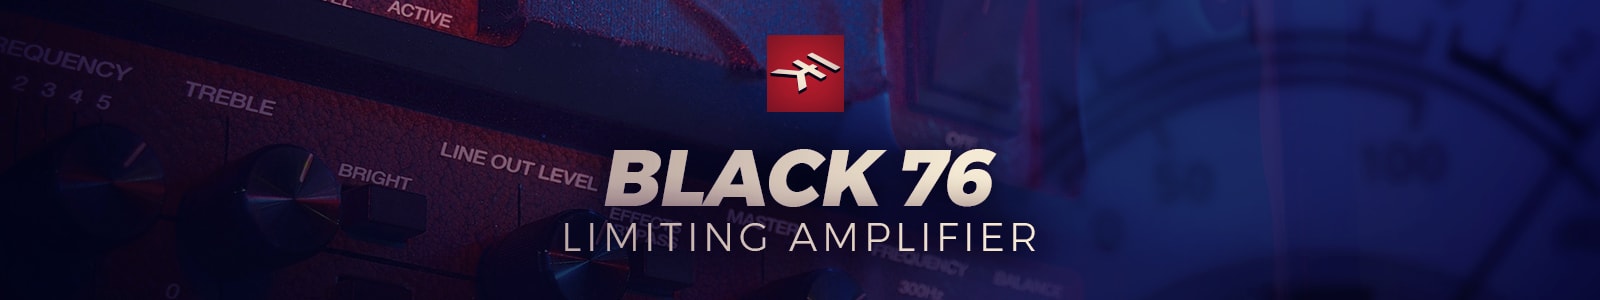 Black 76 Limiting Amp